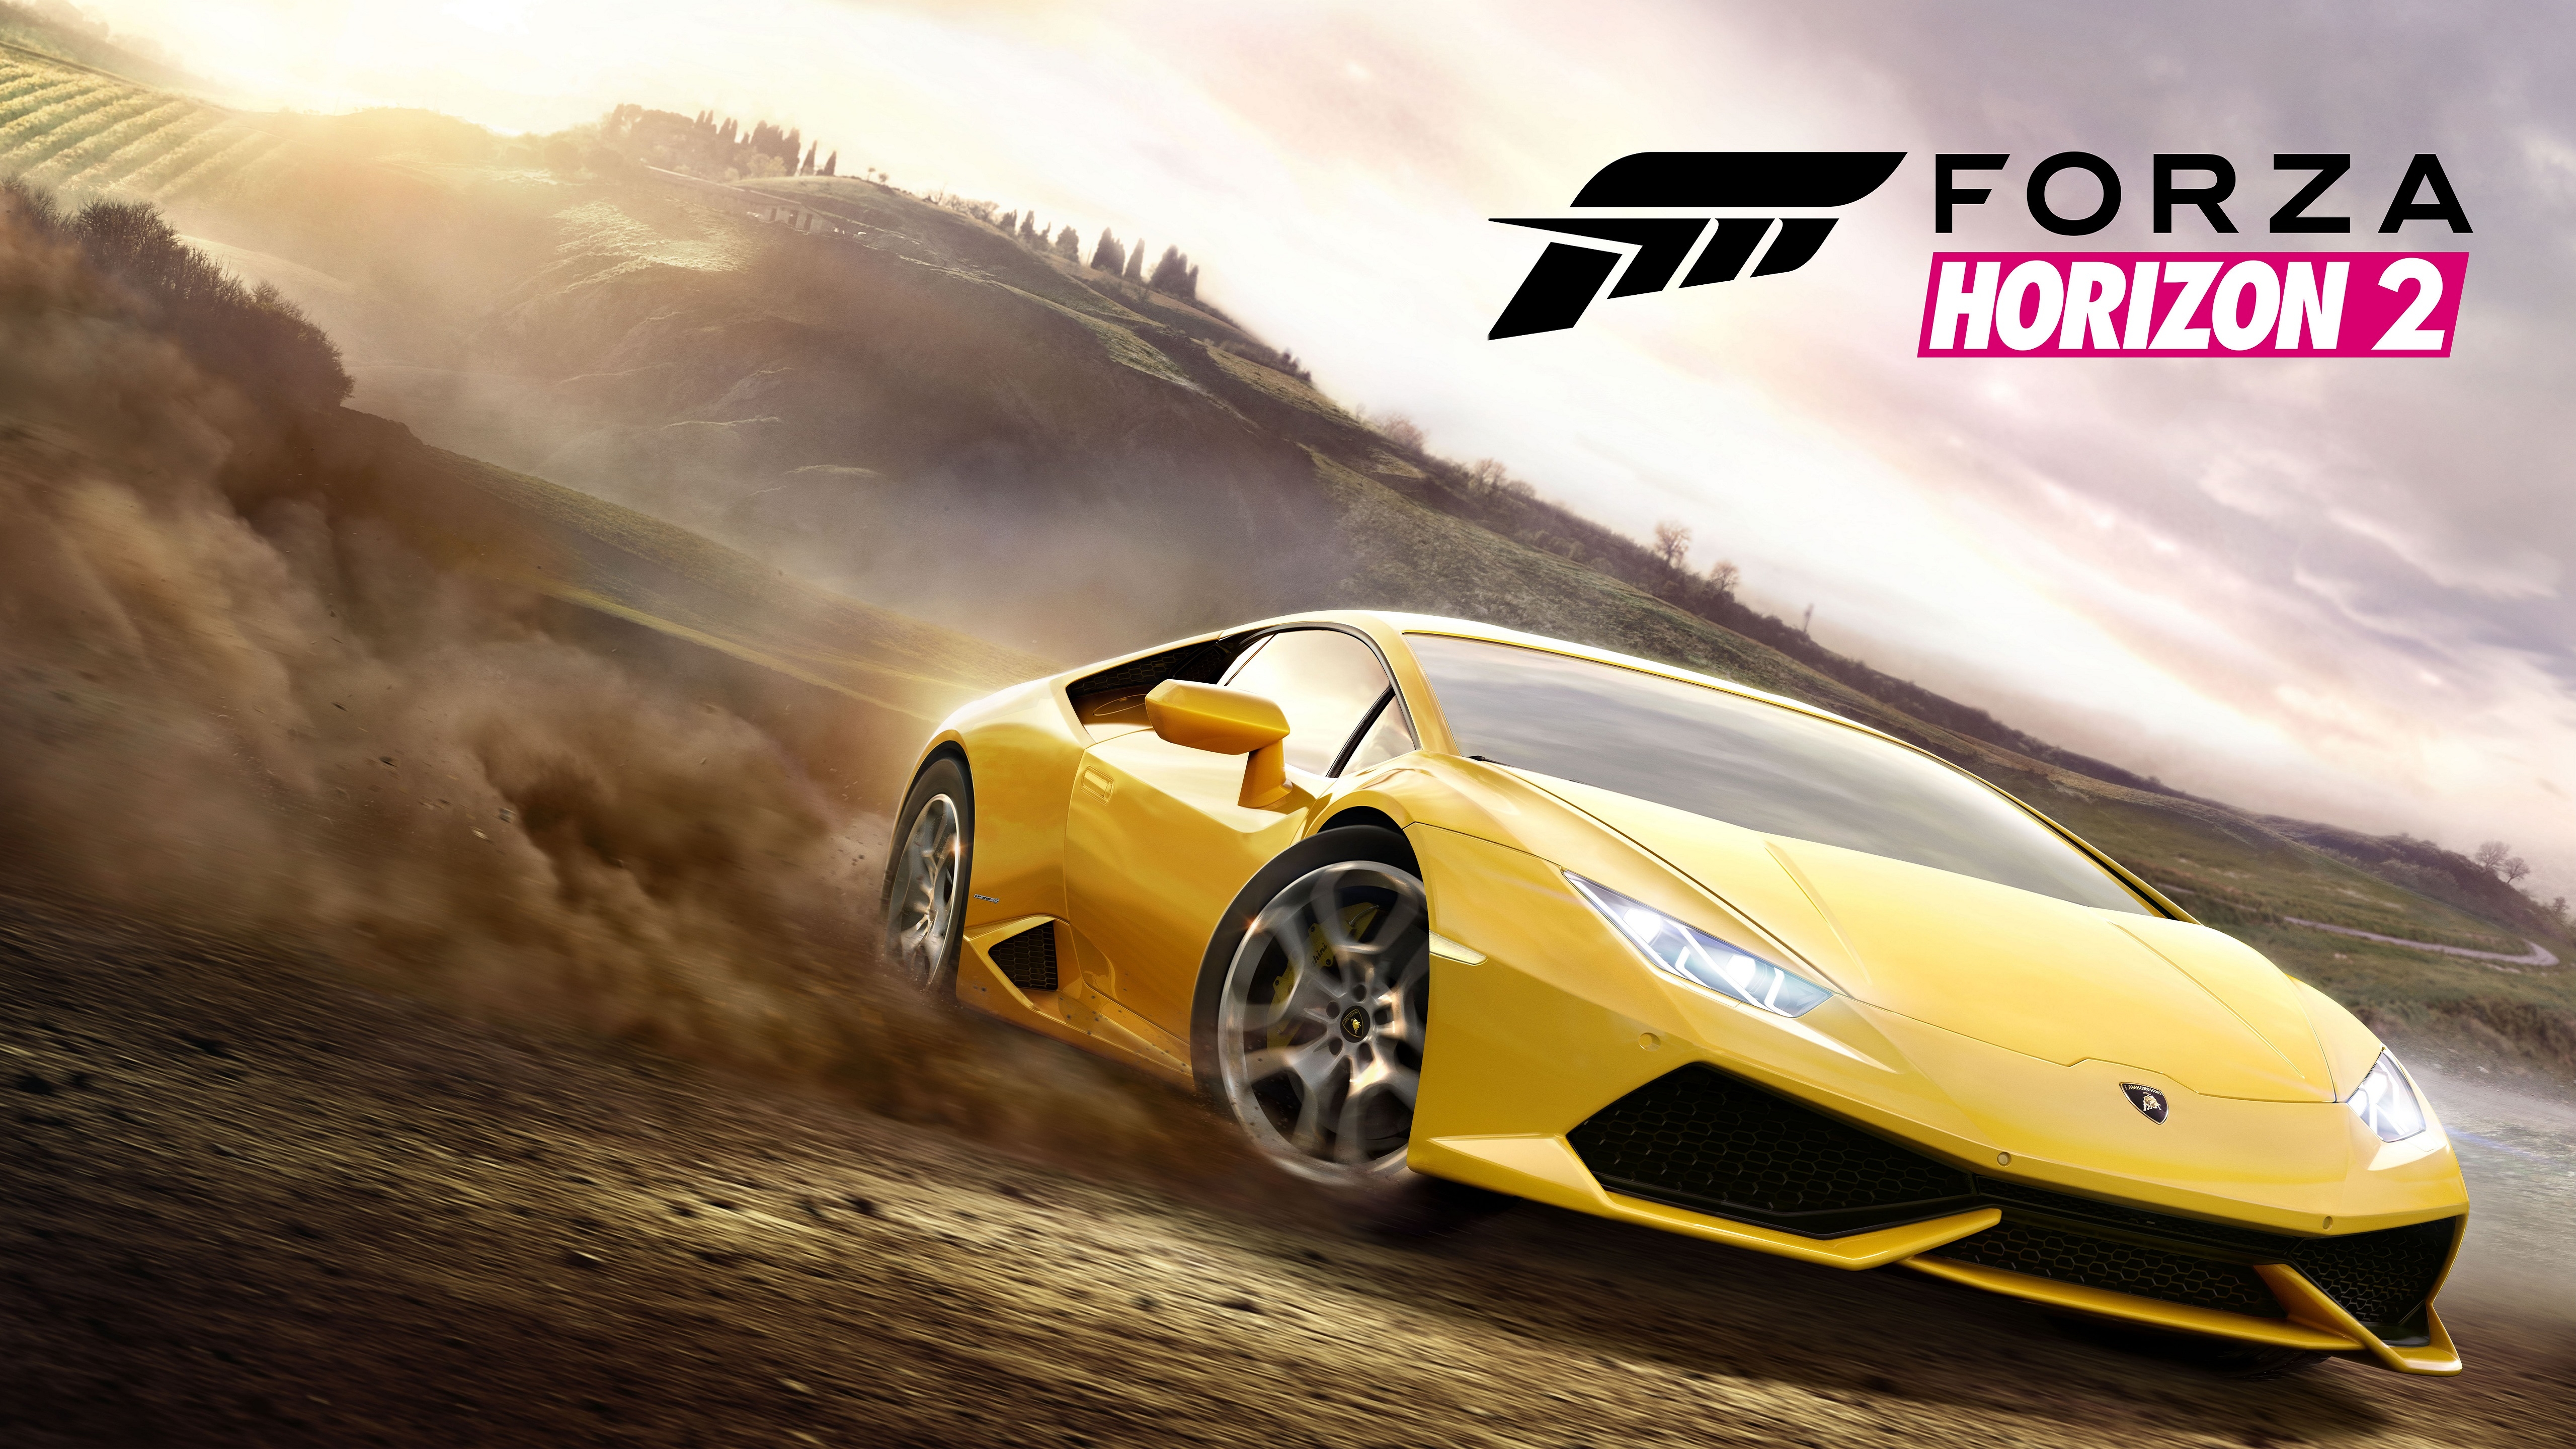 Forza Horizon 2 for 5120 x 2880 5K Ultra HD resolution